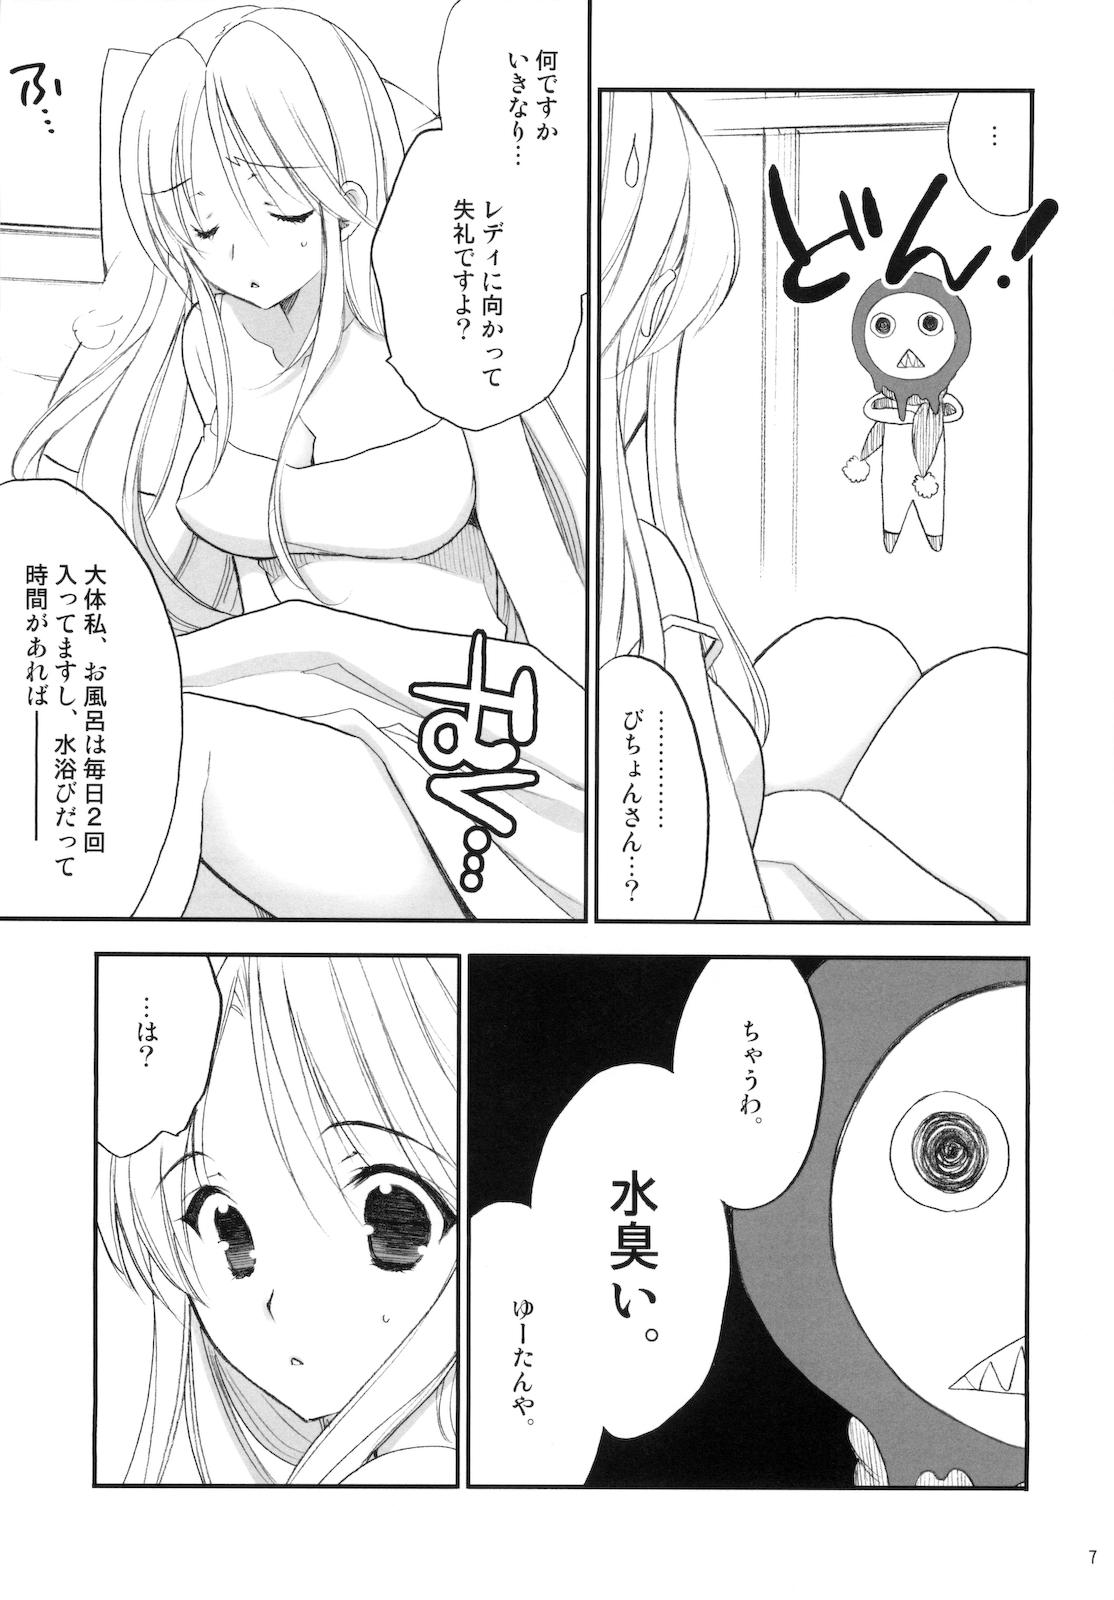 Shot Princess Code 03 - Seiken densetsu 3 Watersports - Page 7